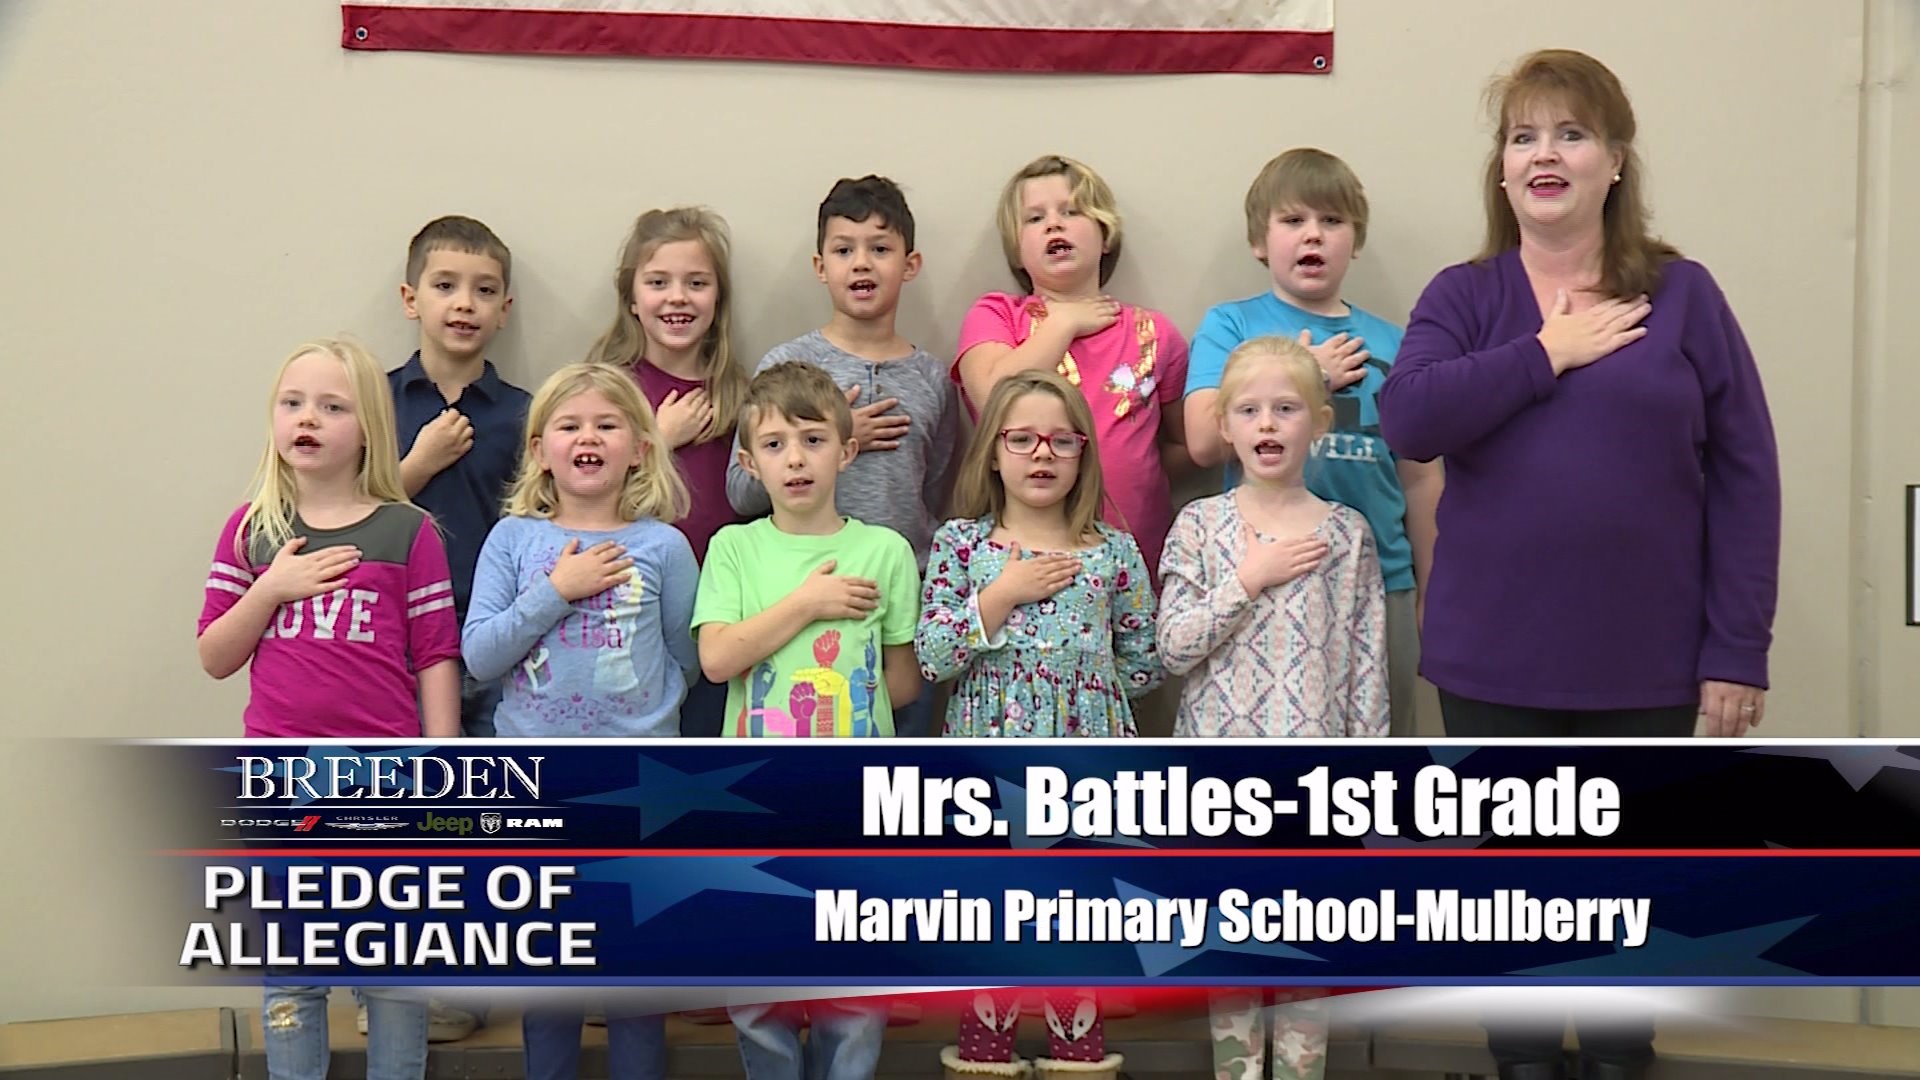 Mrs. Battles  1st Grade Marvin Primary School, Mulberry